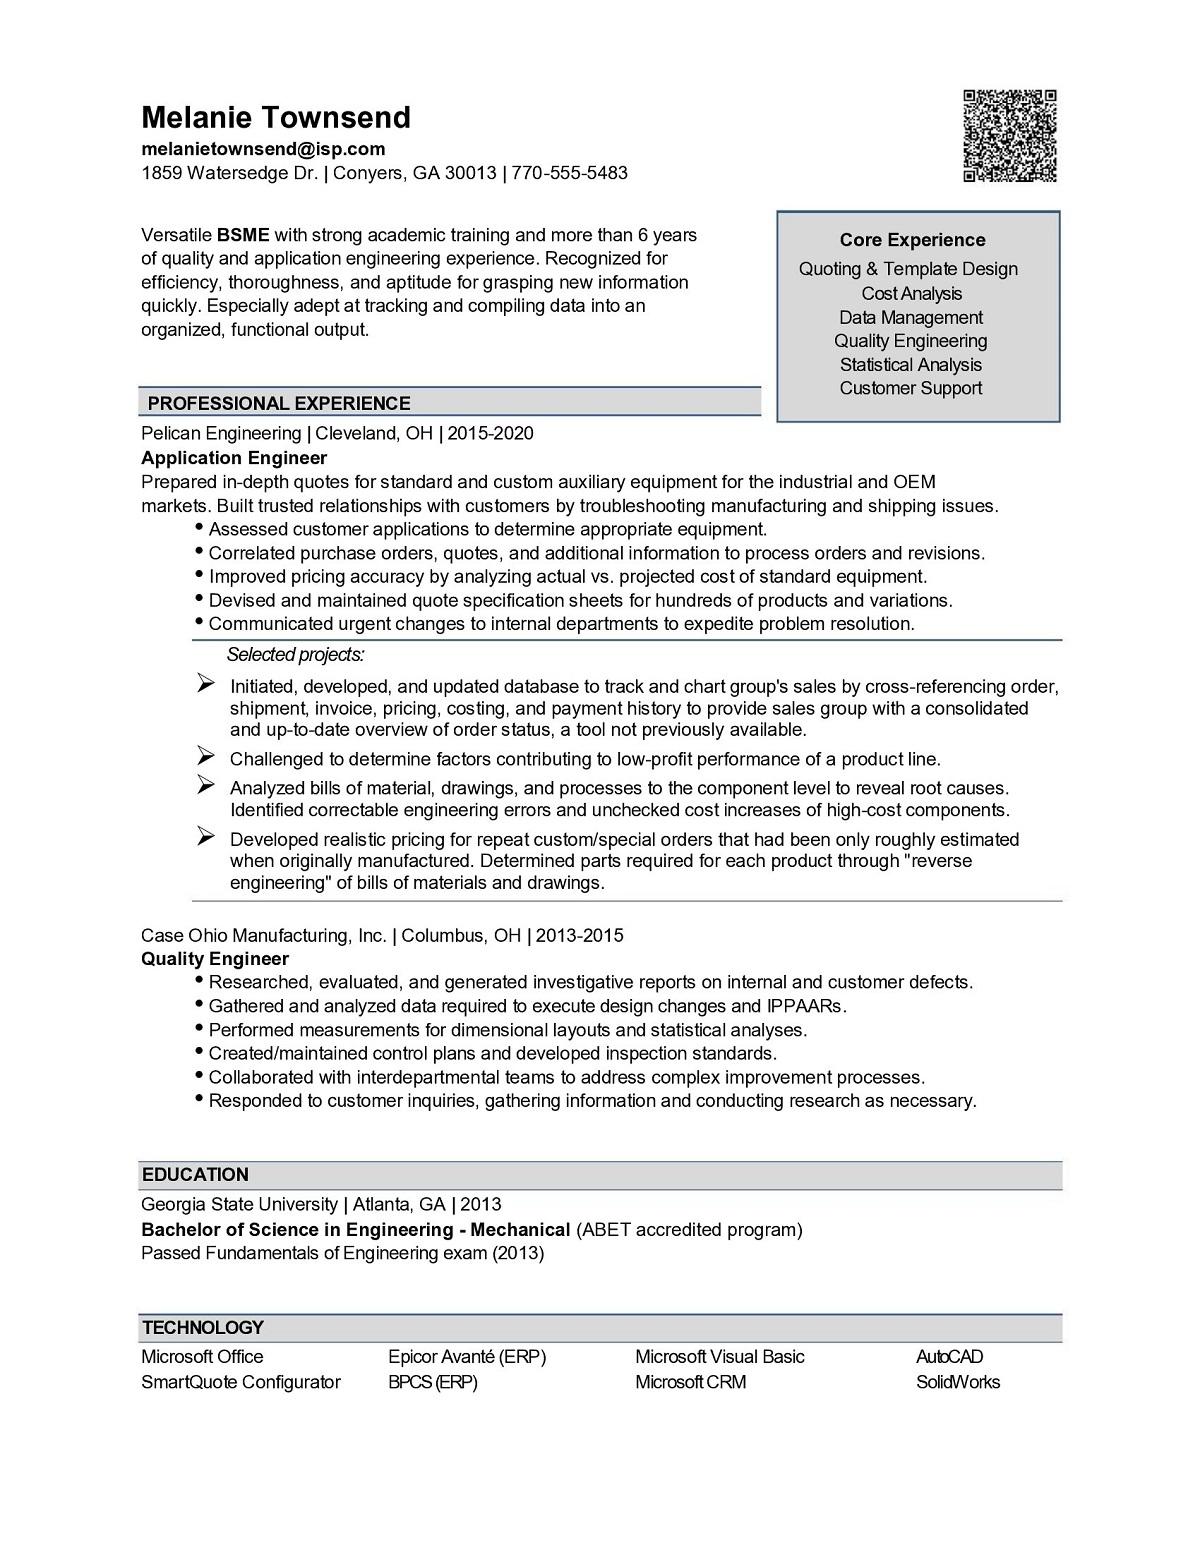 Sample resume: Engineering, Mid Experience, Chronological